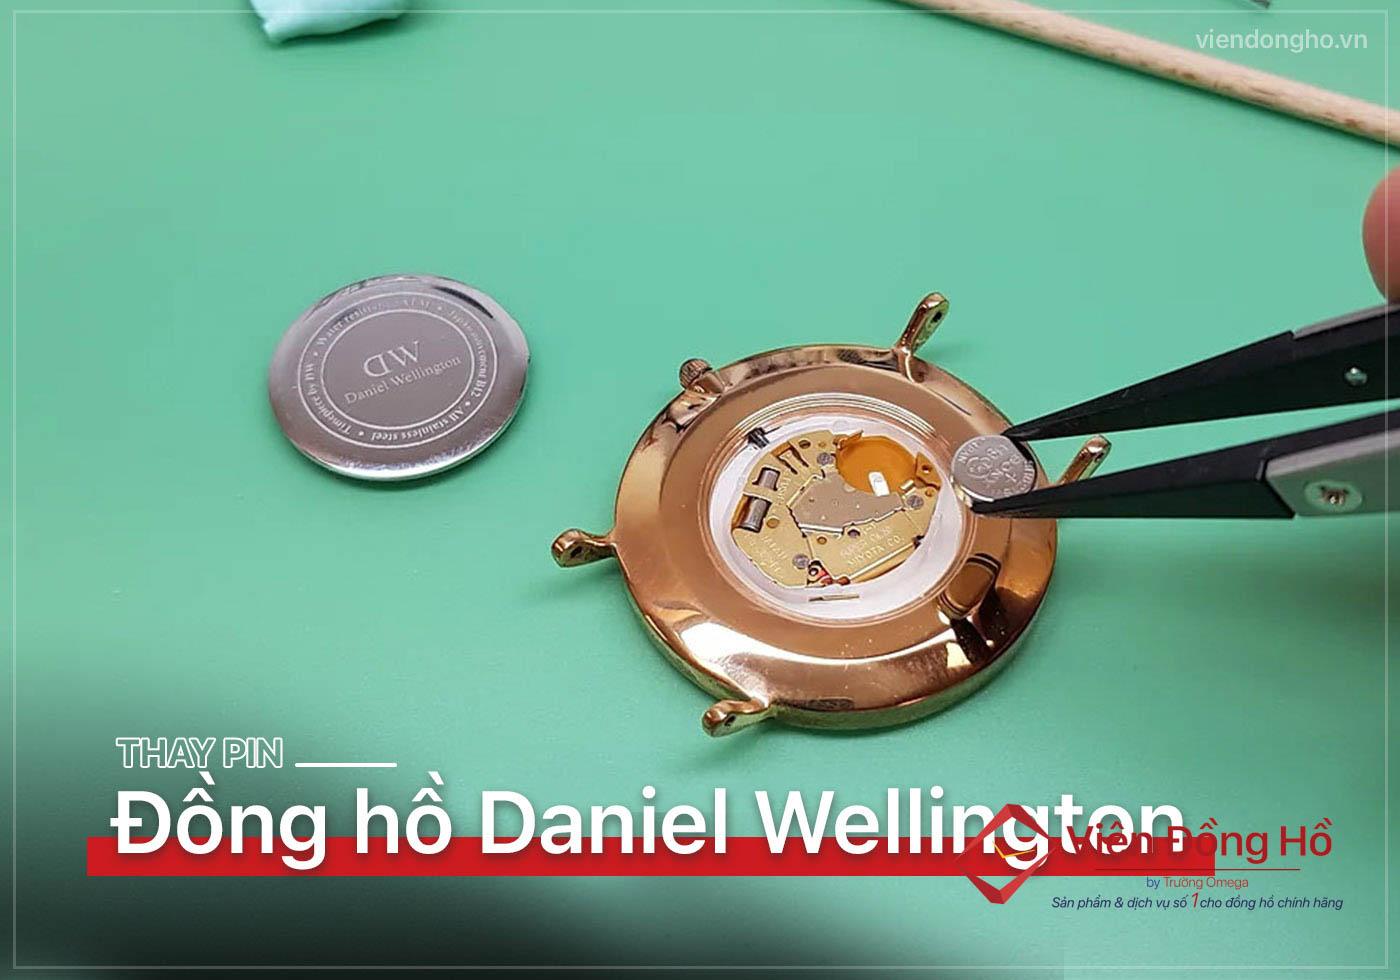 Thay pin dong ho Daniel Wellington 5